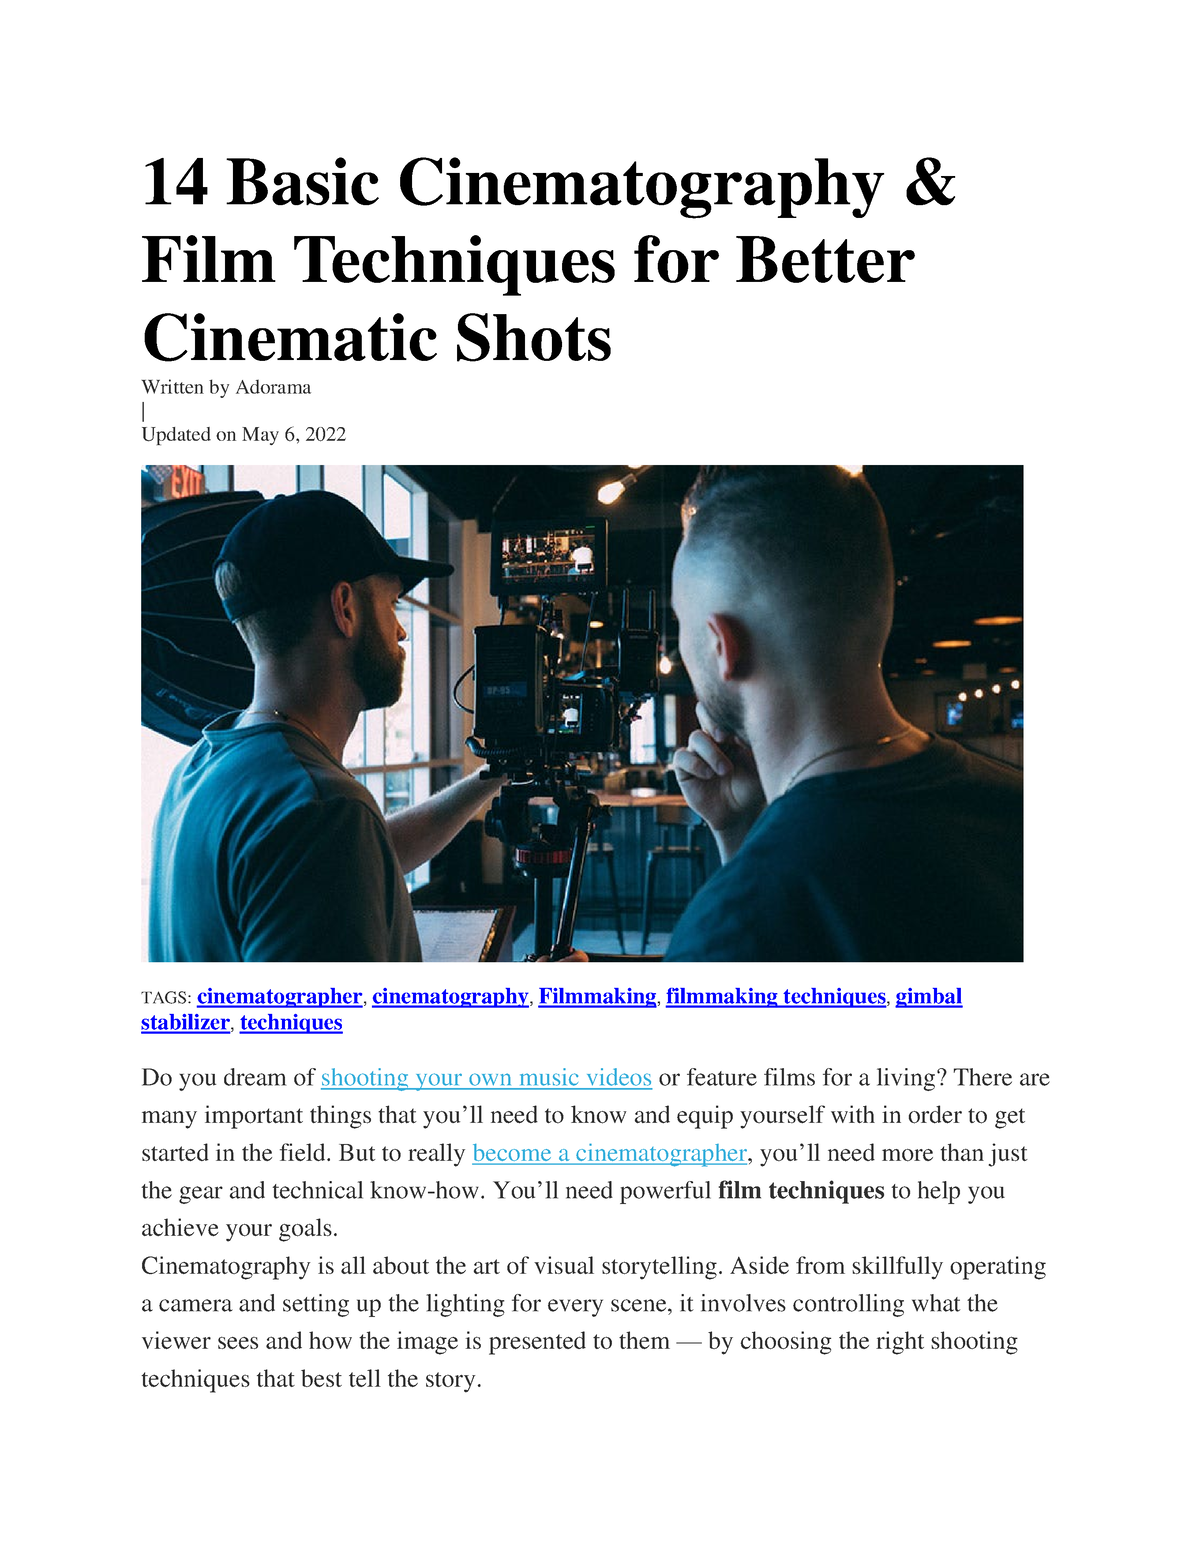 Basic Cinematography & Film Techniques for Better Cinematic Shots - ALC